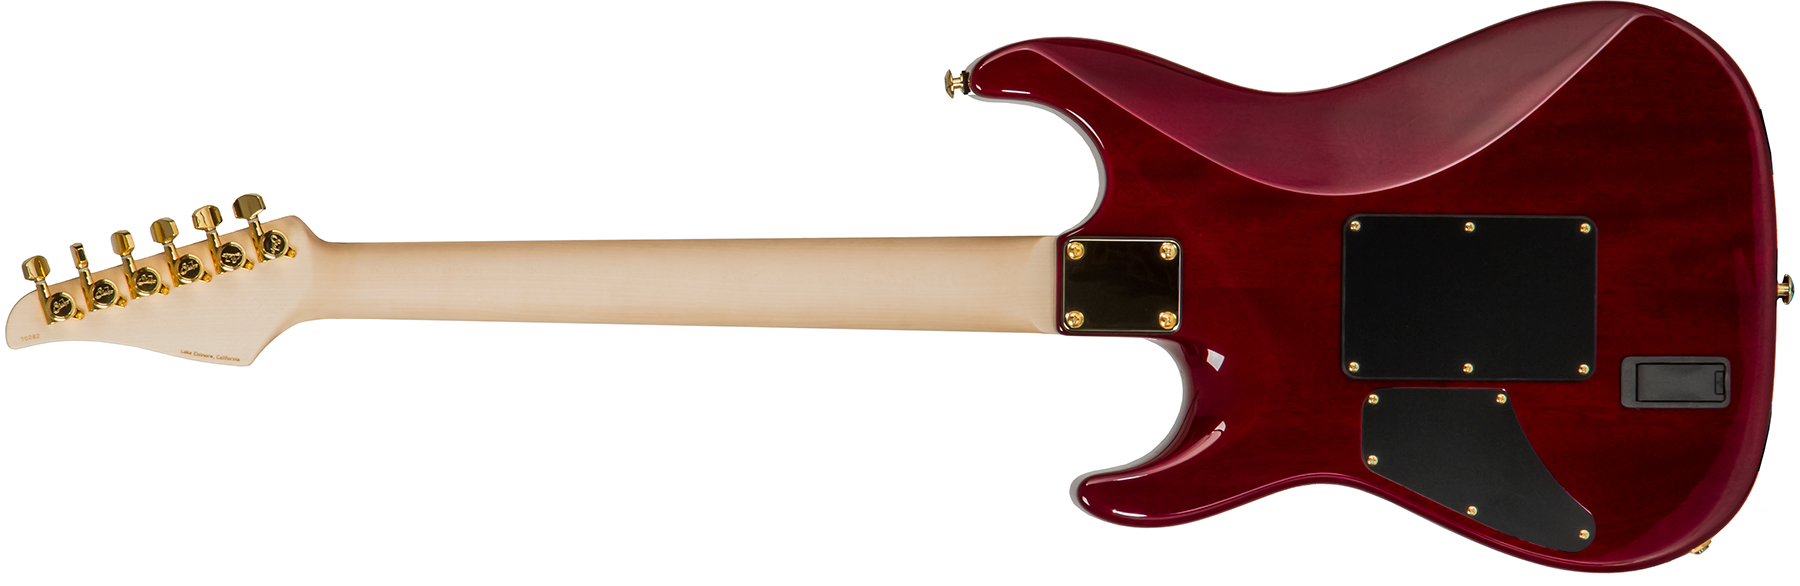 Suhr Standard Legacy 01-ltd-0030 Hss Emg Fr Rw #70282 - Aged Cherry Burst - Guitarra eléctrica con forma de str. - Variation 1